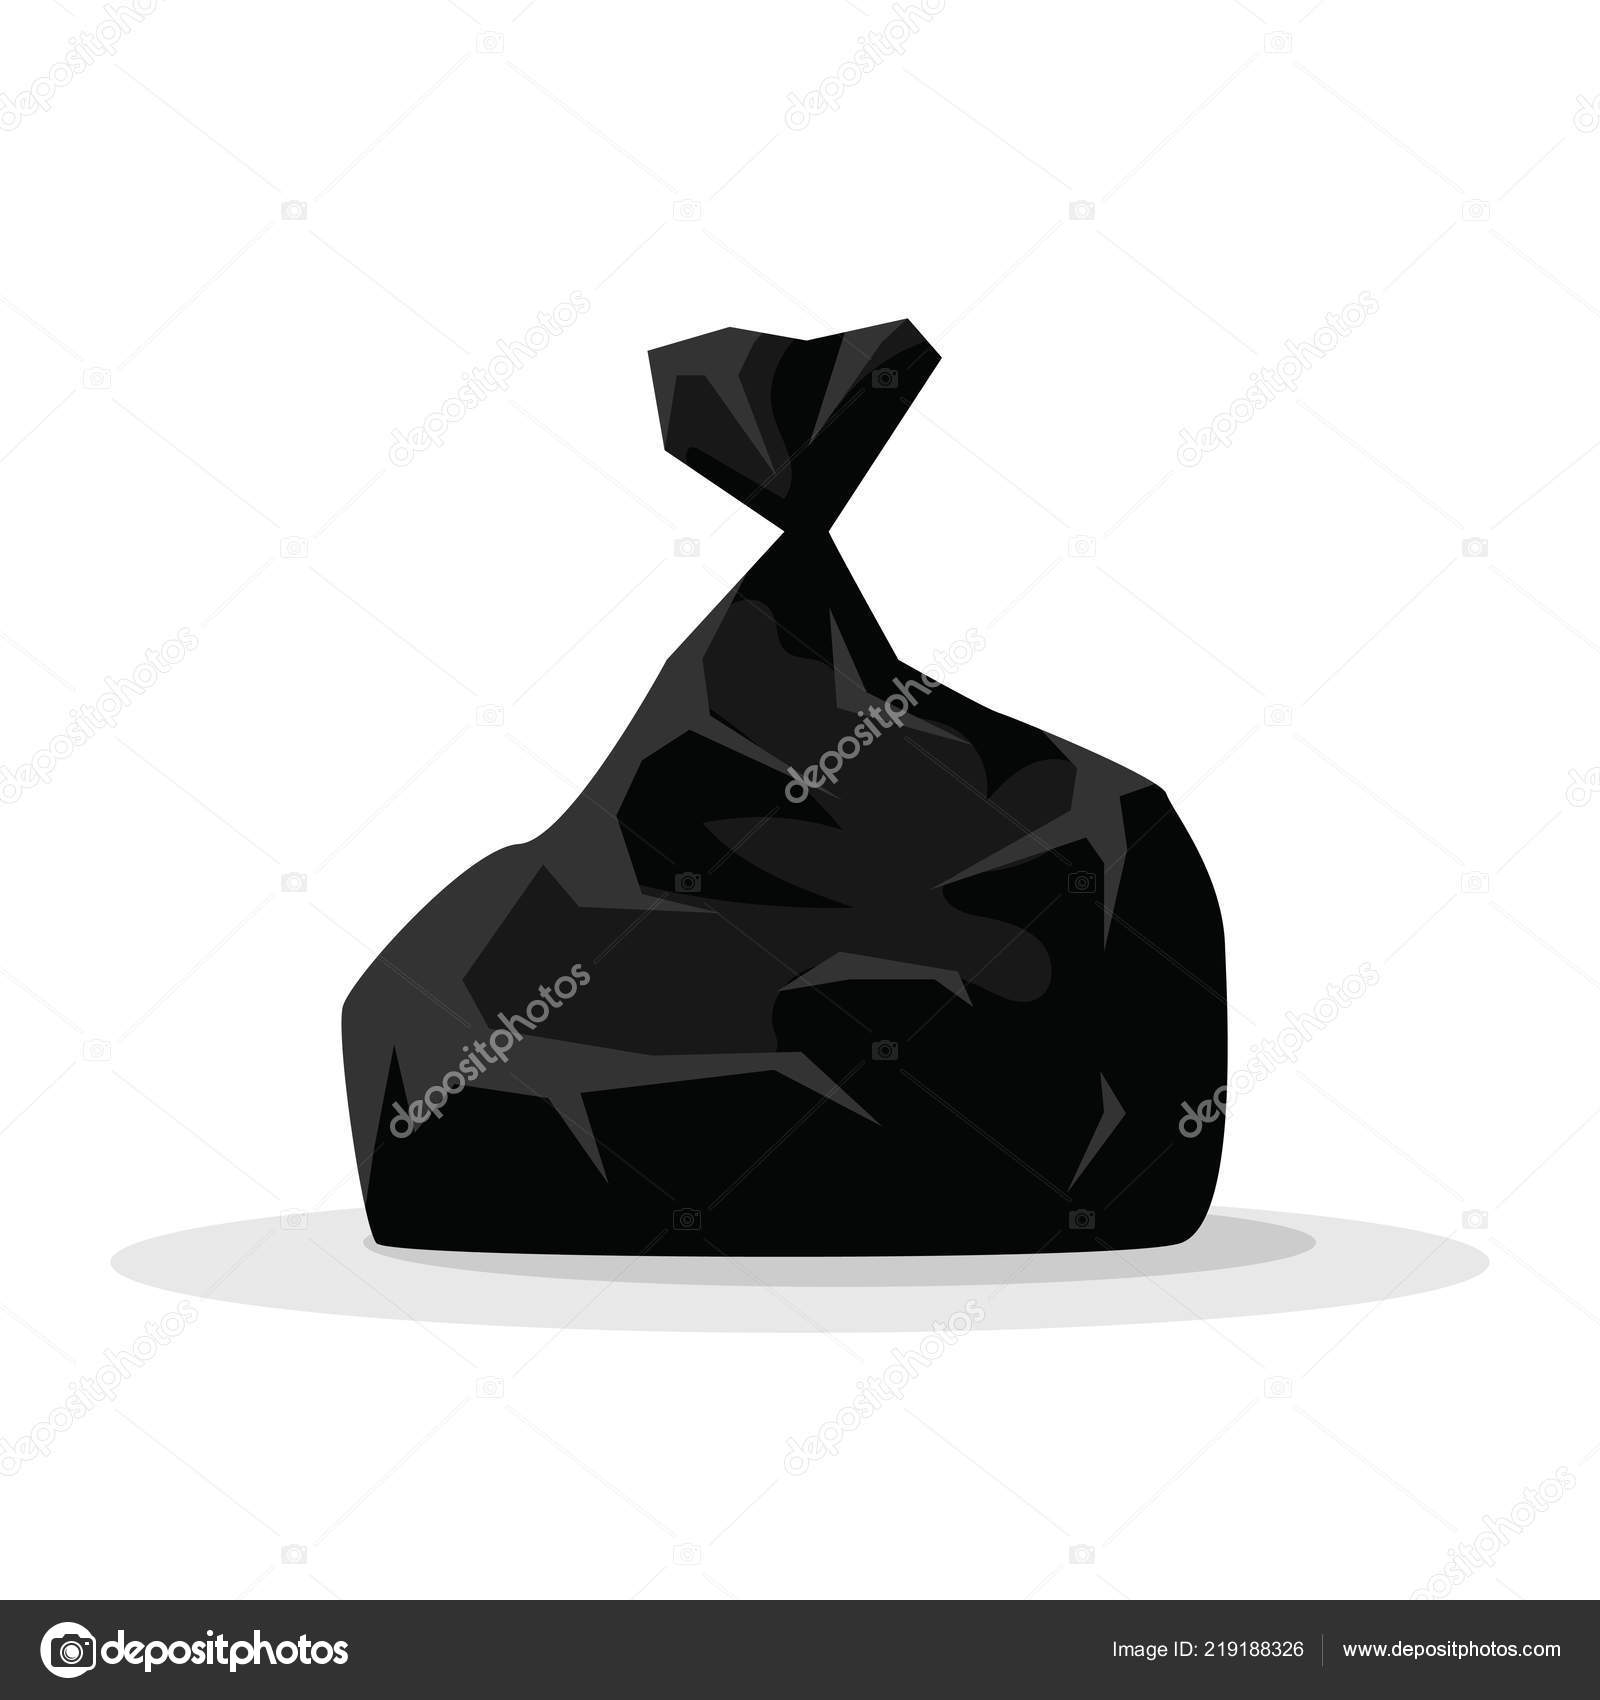 https://st4.depositphotos.com/7070998/21918/v/1600/depositphotos_219188326-stock-illustration-vector-illustration-black-bag-with.jpg